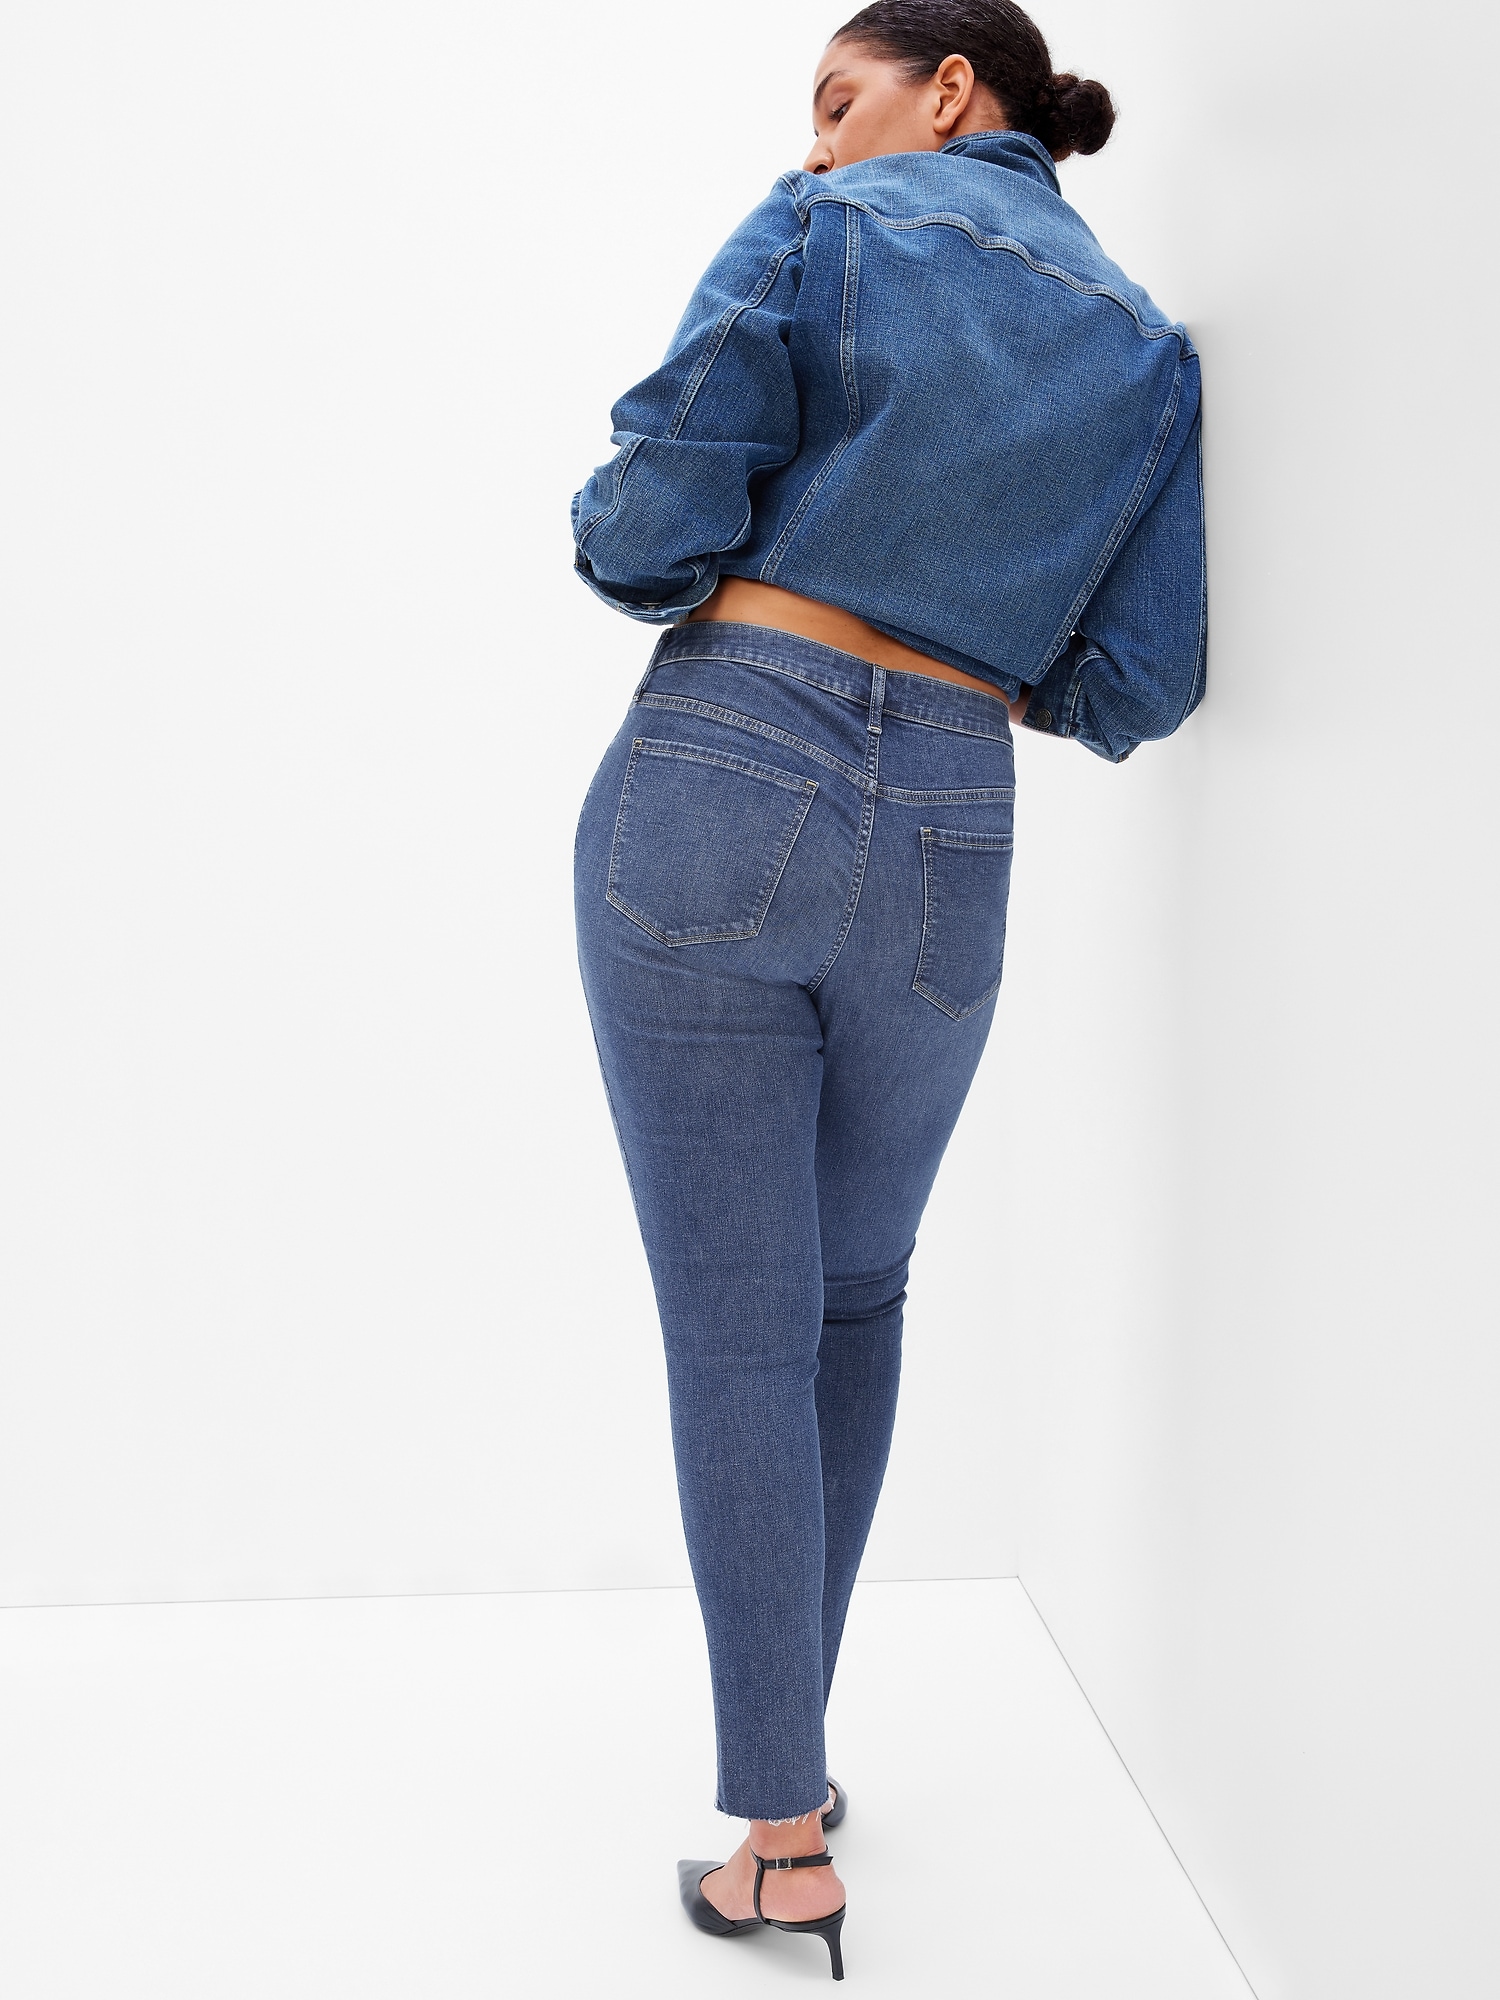 Gap brand Girls Jeans Jeggings sz 8 Two pair